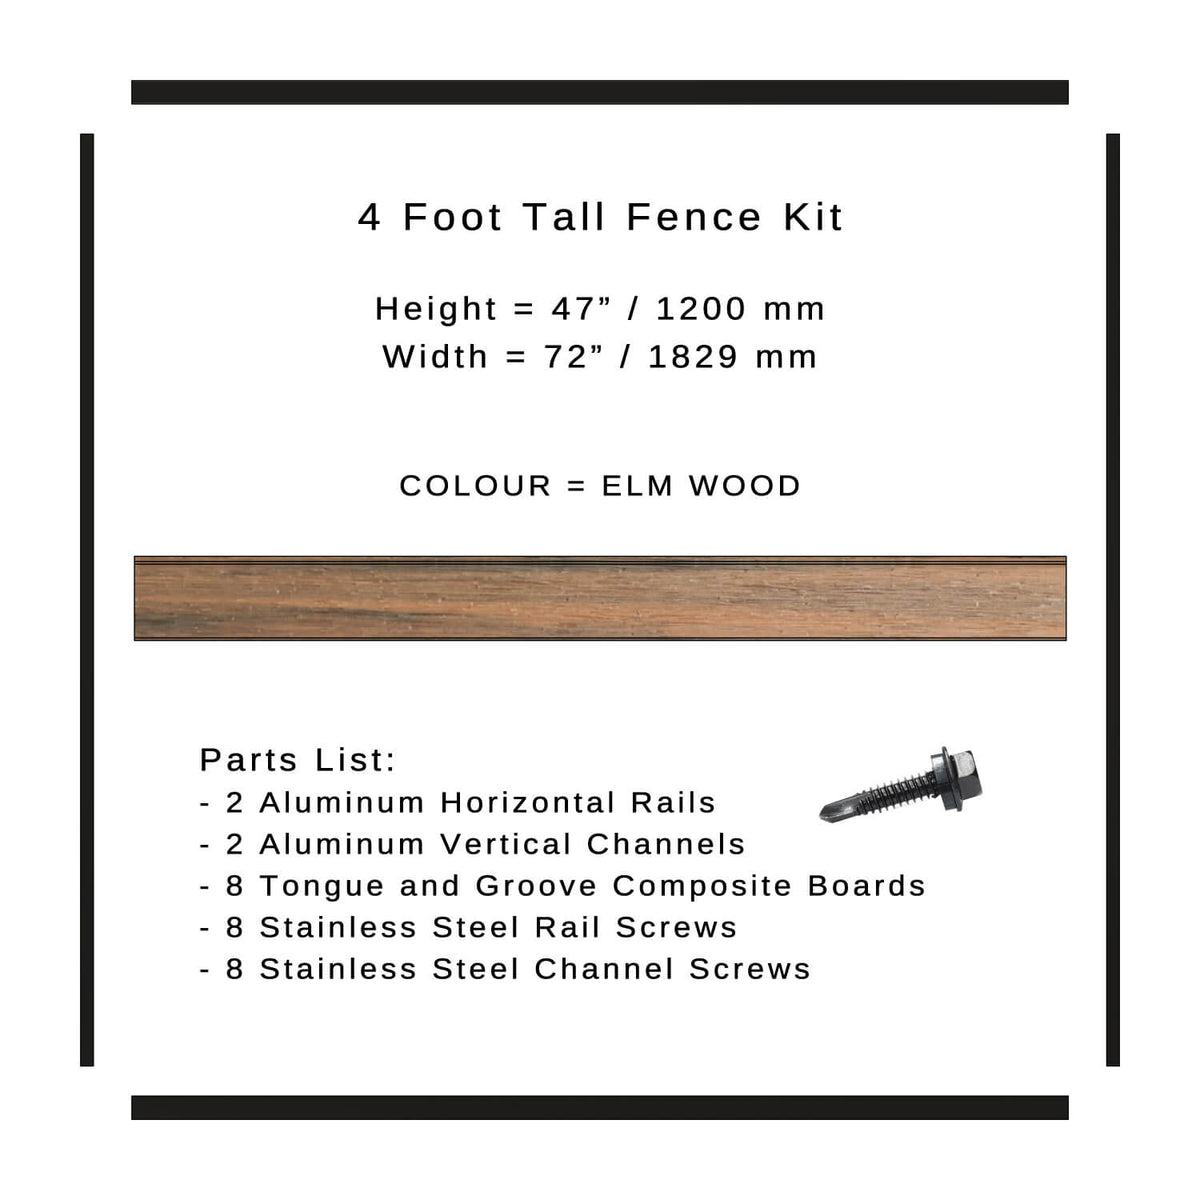 4 foot tall modular fence kit in elm wood